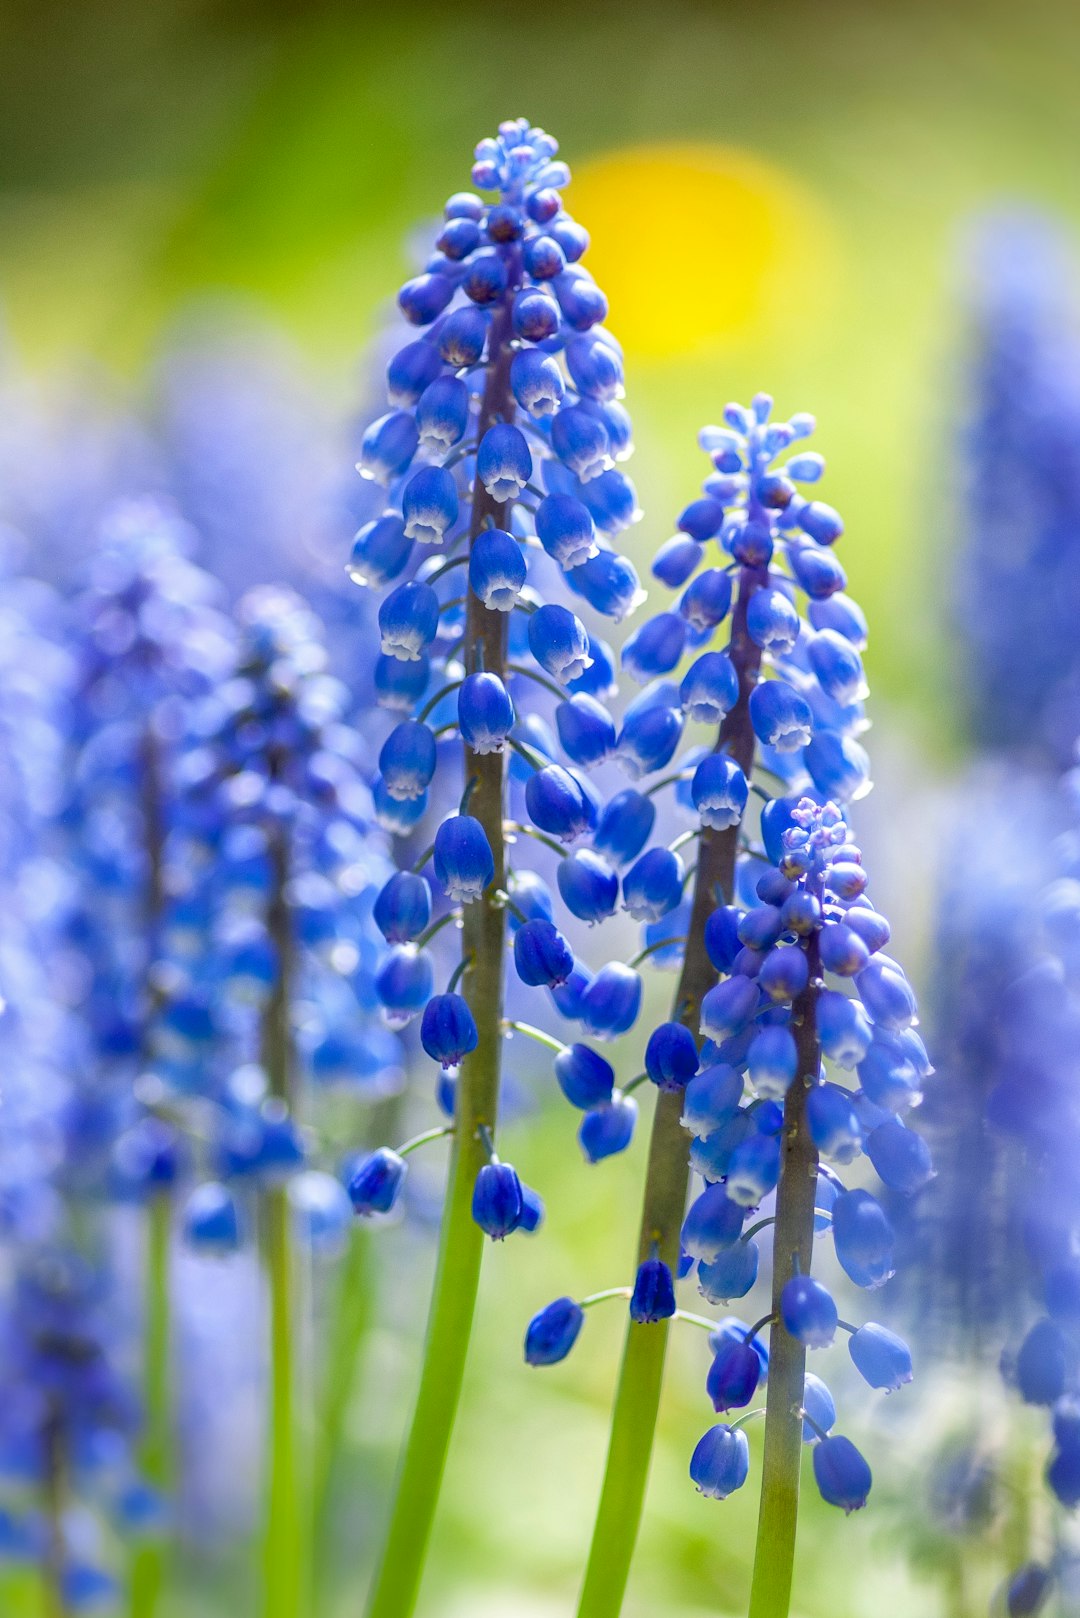 blue flowers close-up photo